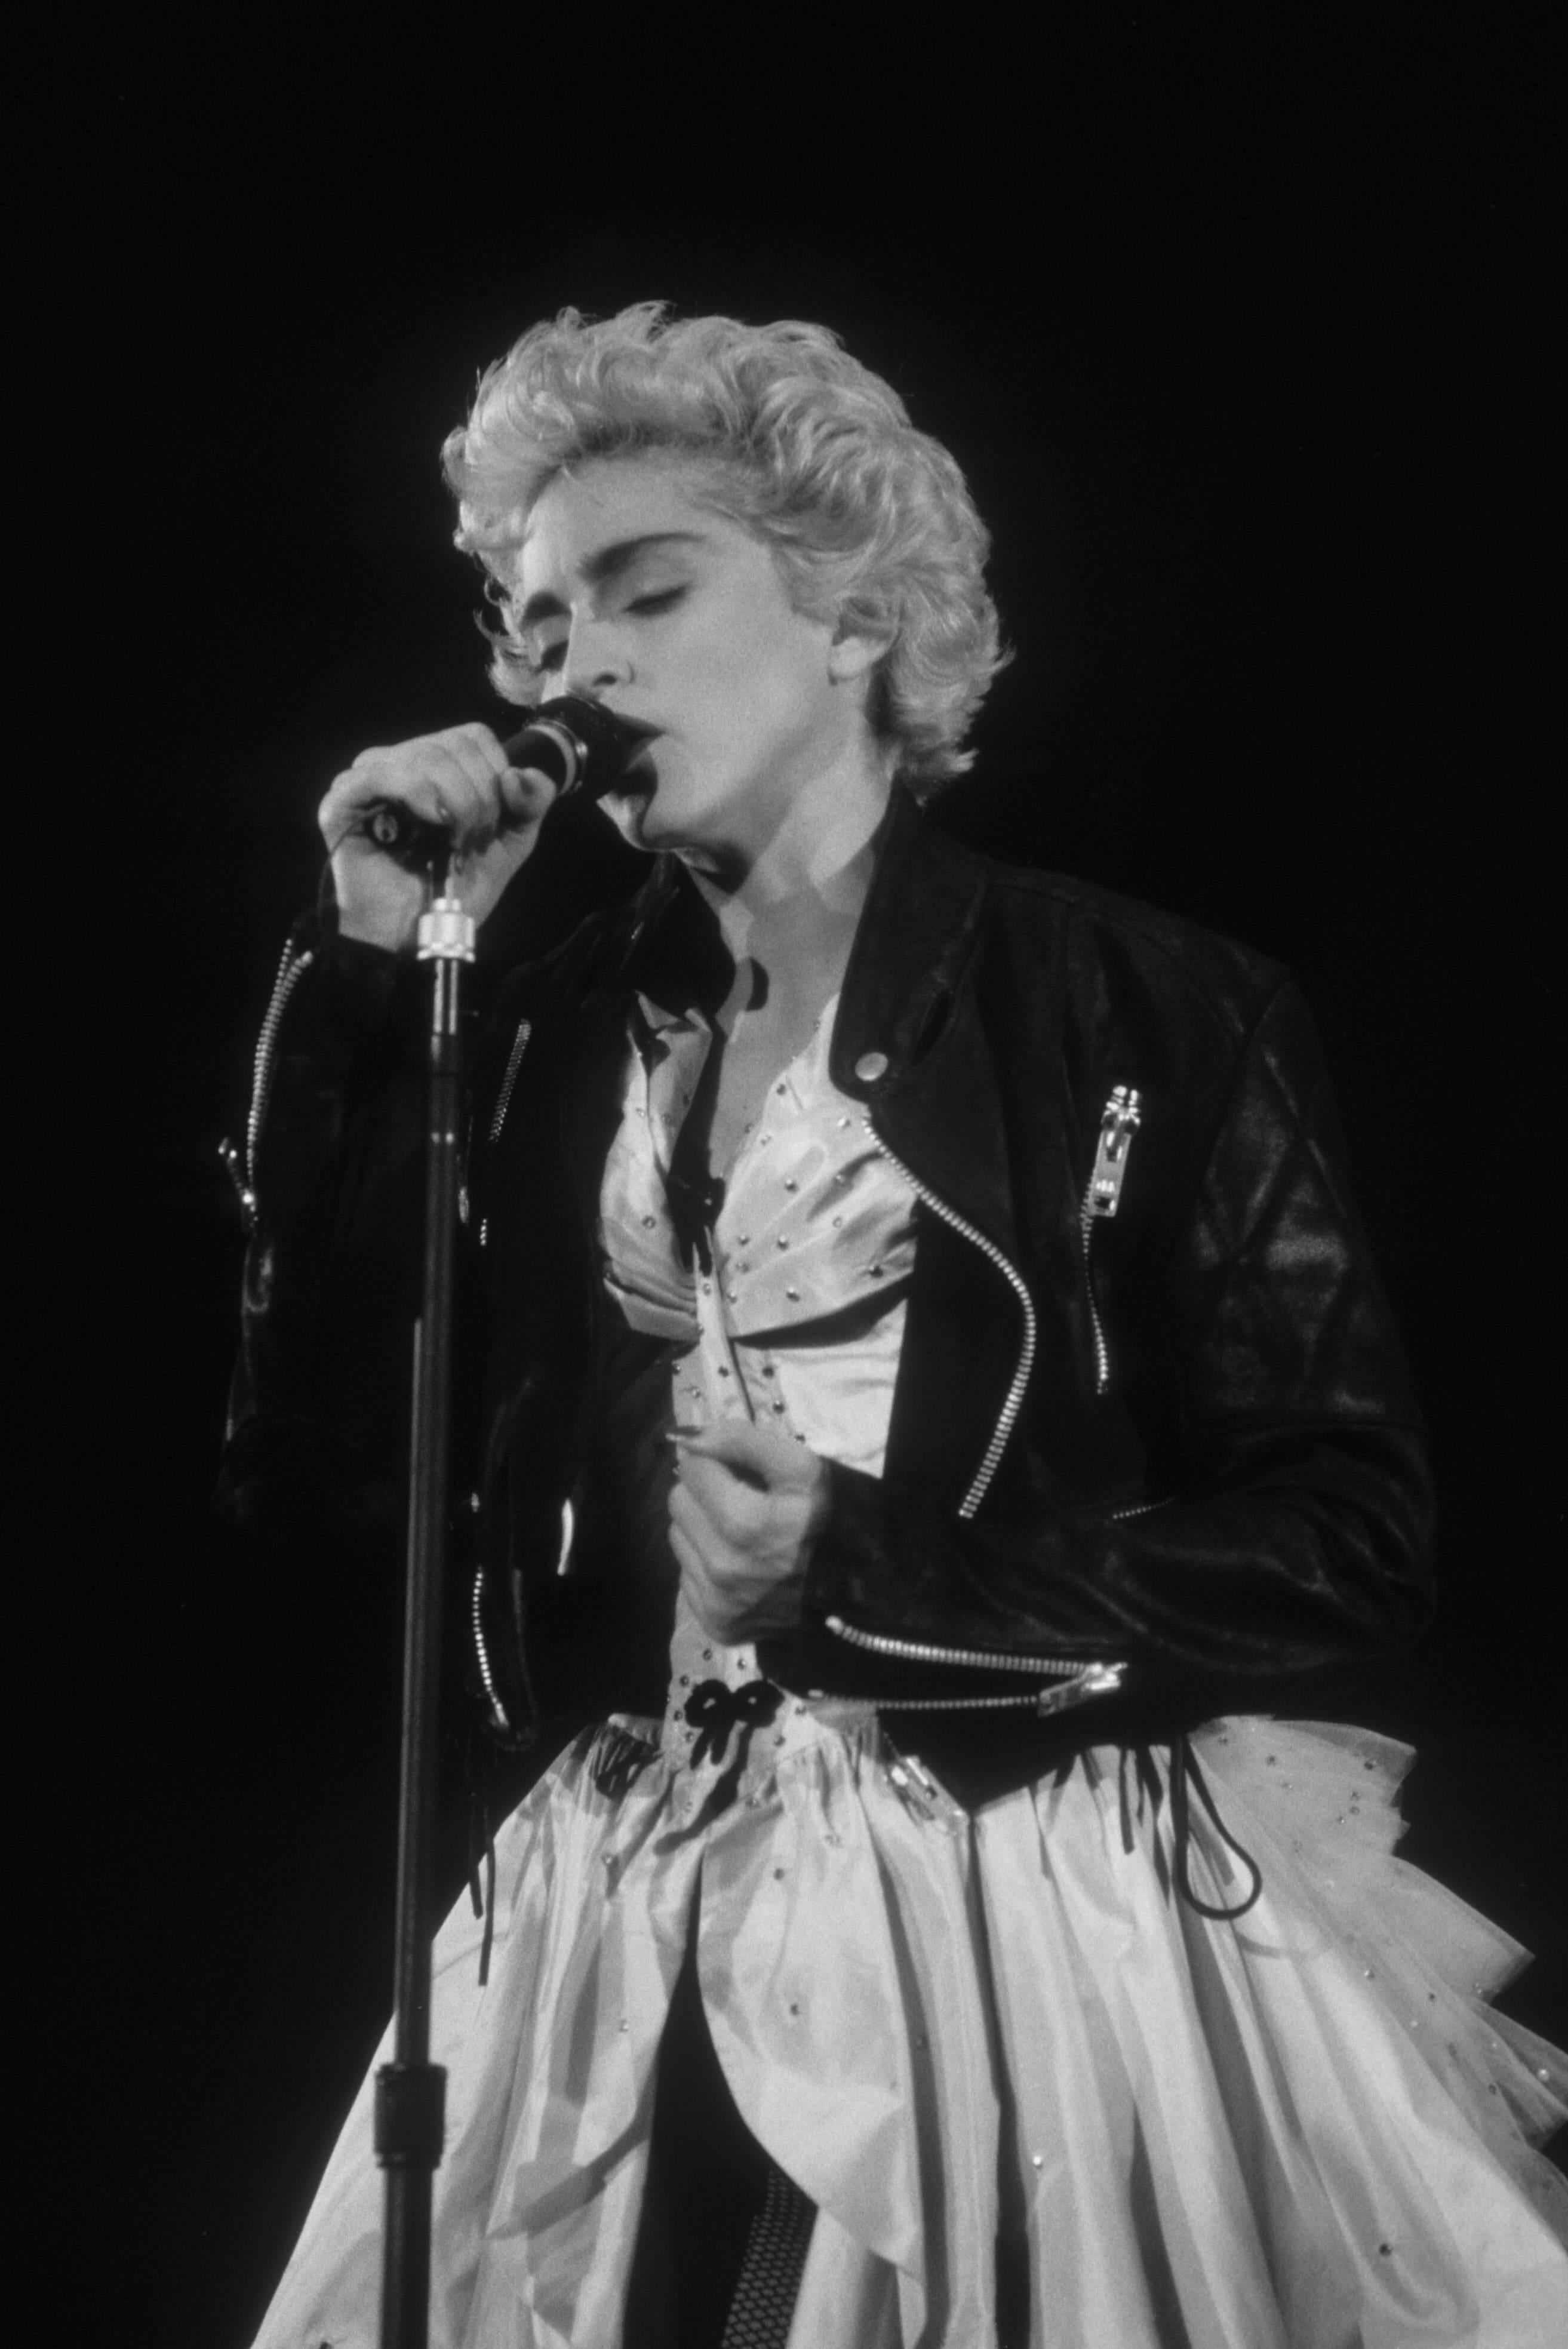 David Plastik Portrait Photograph - Madonna Singing into Microphone Fine Art Print